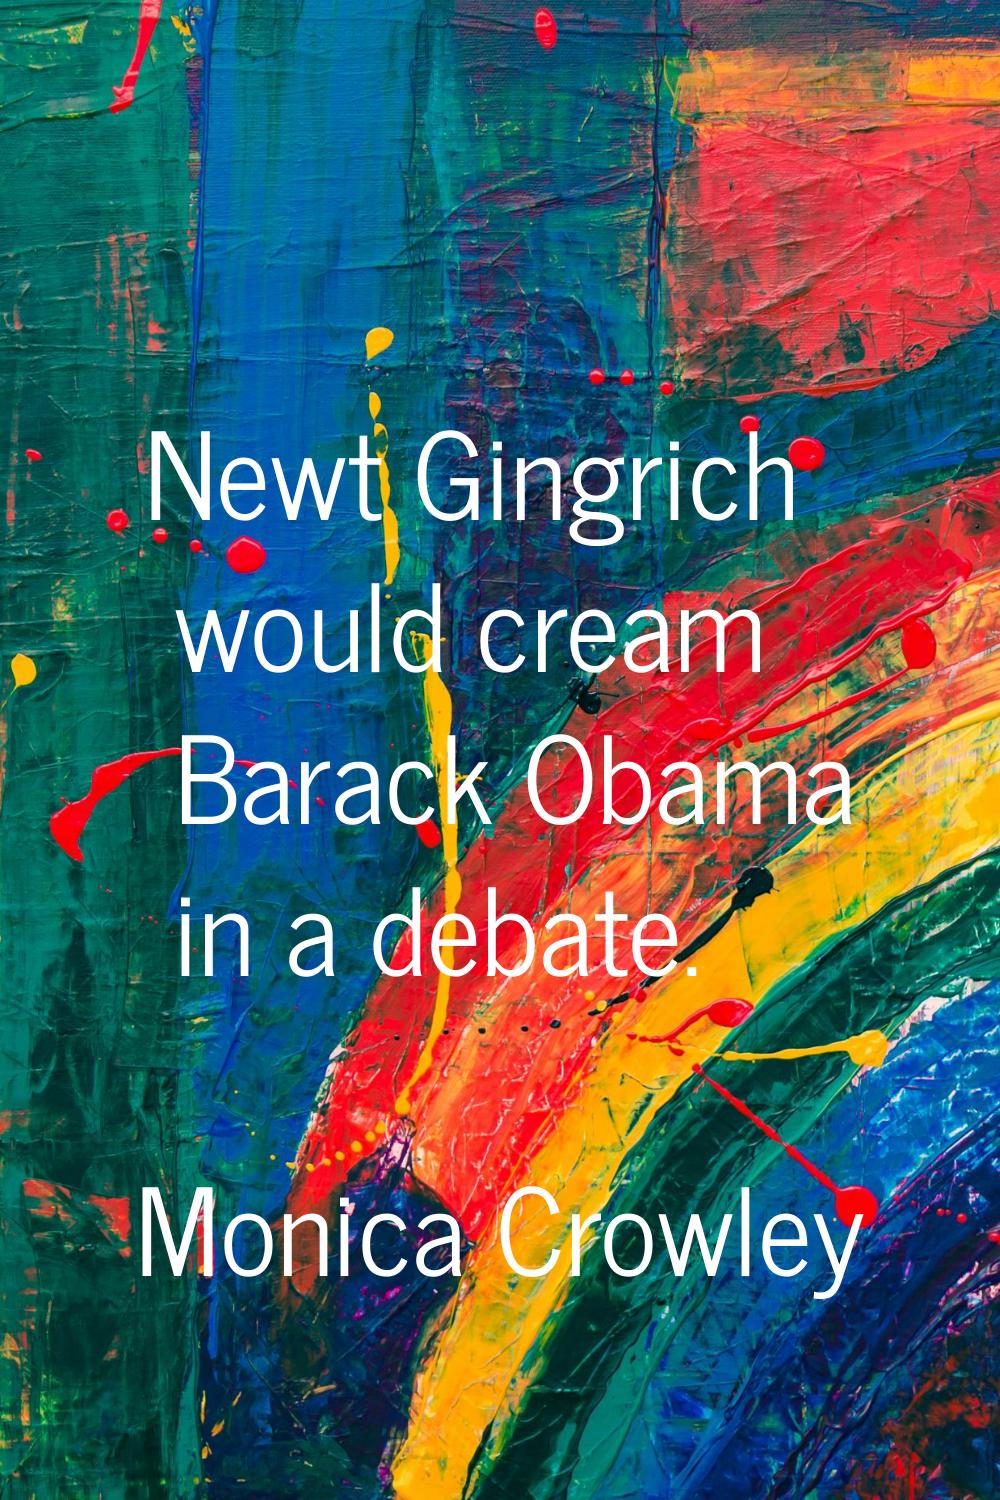 Newt Gingrich would cream Barack Obama in a debate.